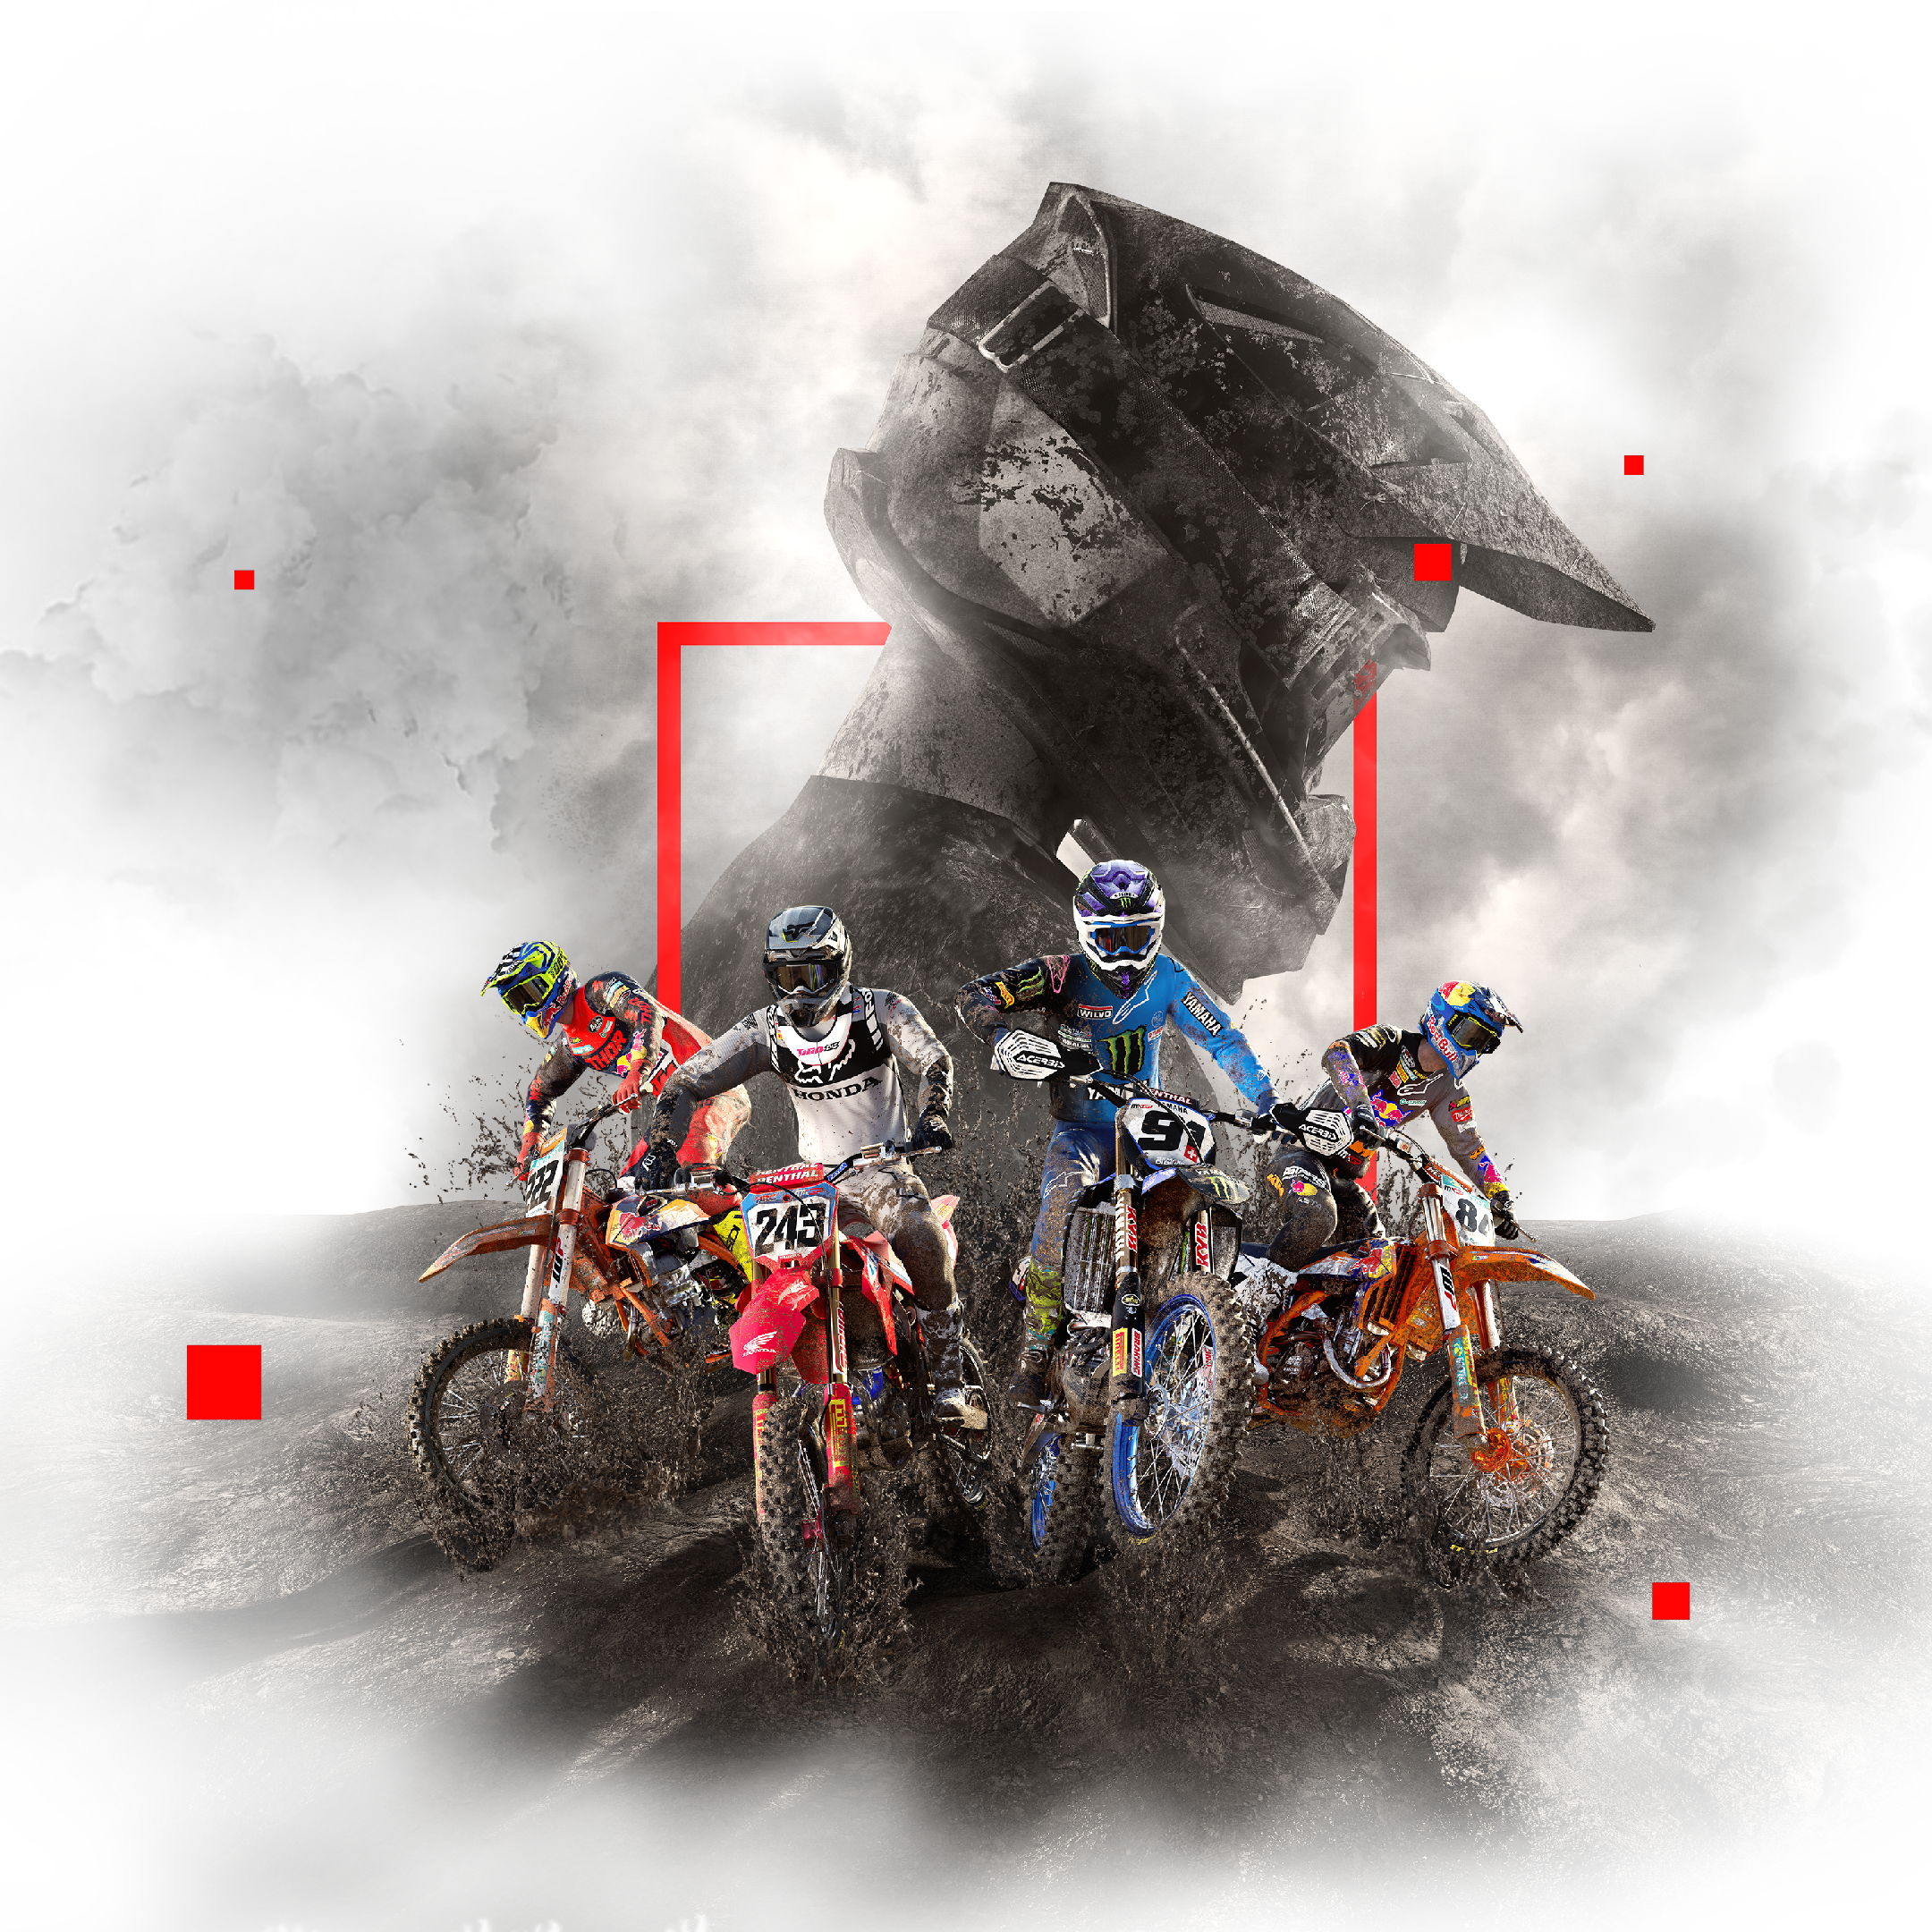 Mxgp 2021 - The Official Motocross Videogame - Ragnar Gamer